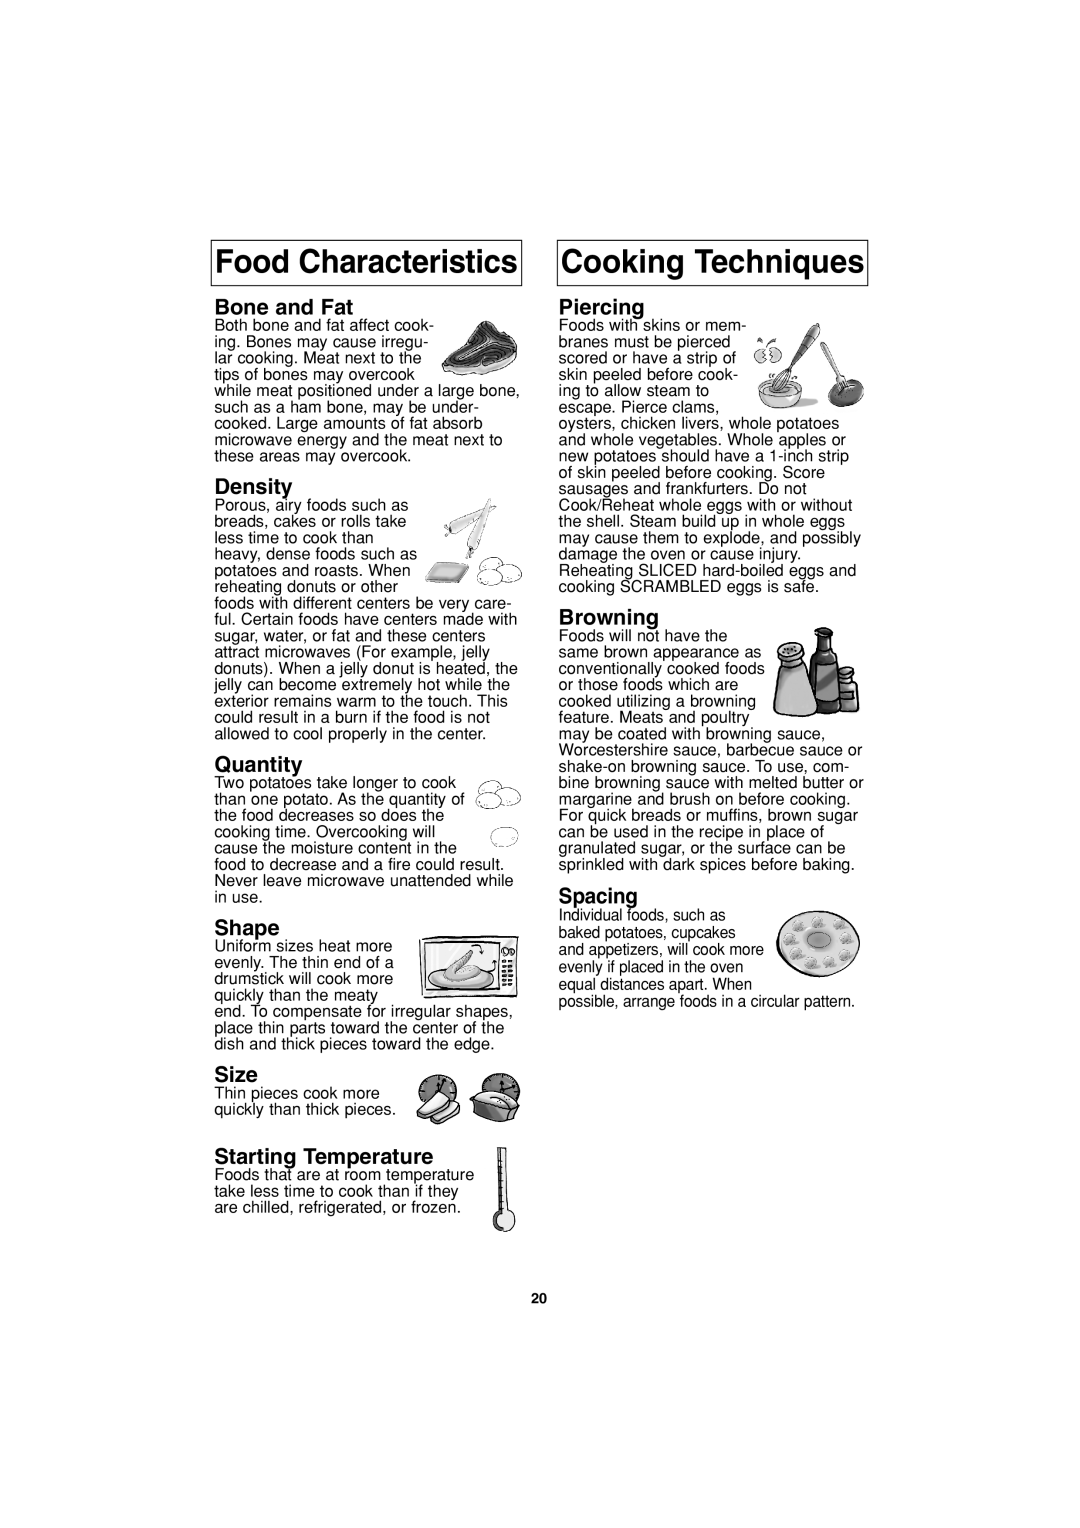 Panasonic NN-S423 Food Characteristics, Cooking Techniques, Bone and Fat, Density, Quantity, Shape, Size, Piercing 